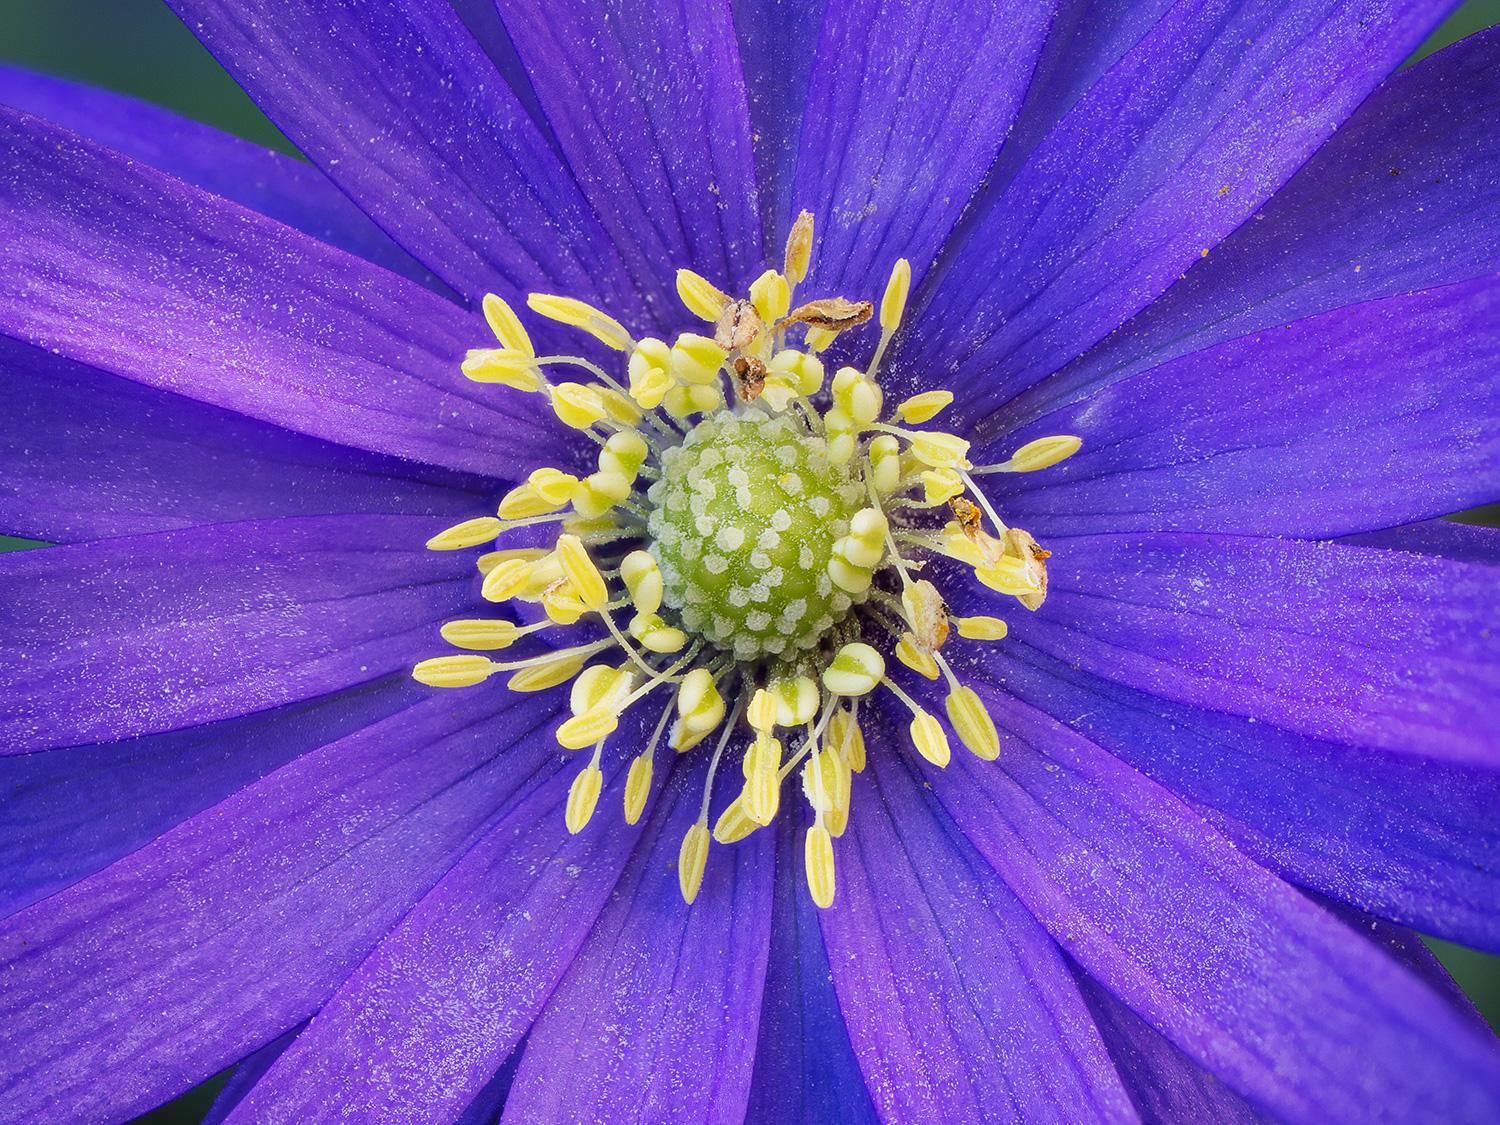 purple_flower.jpg